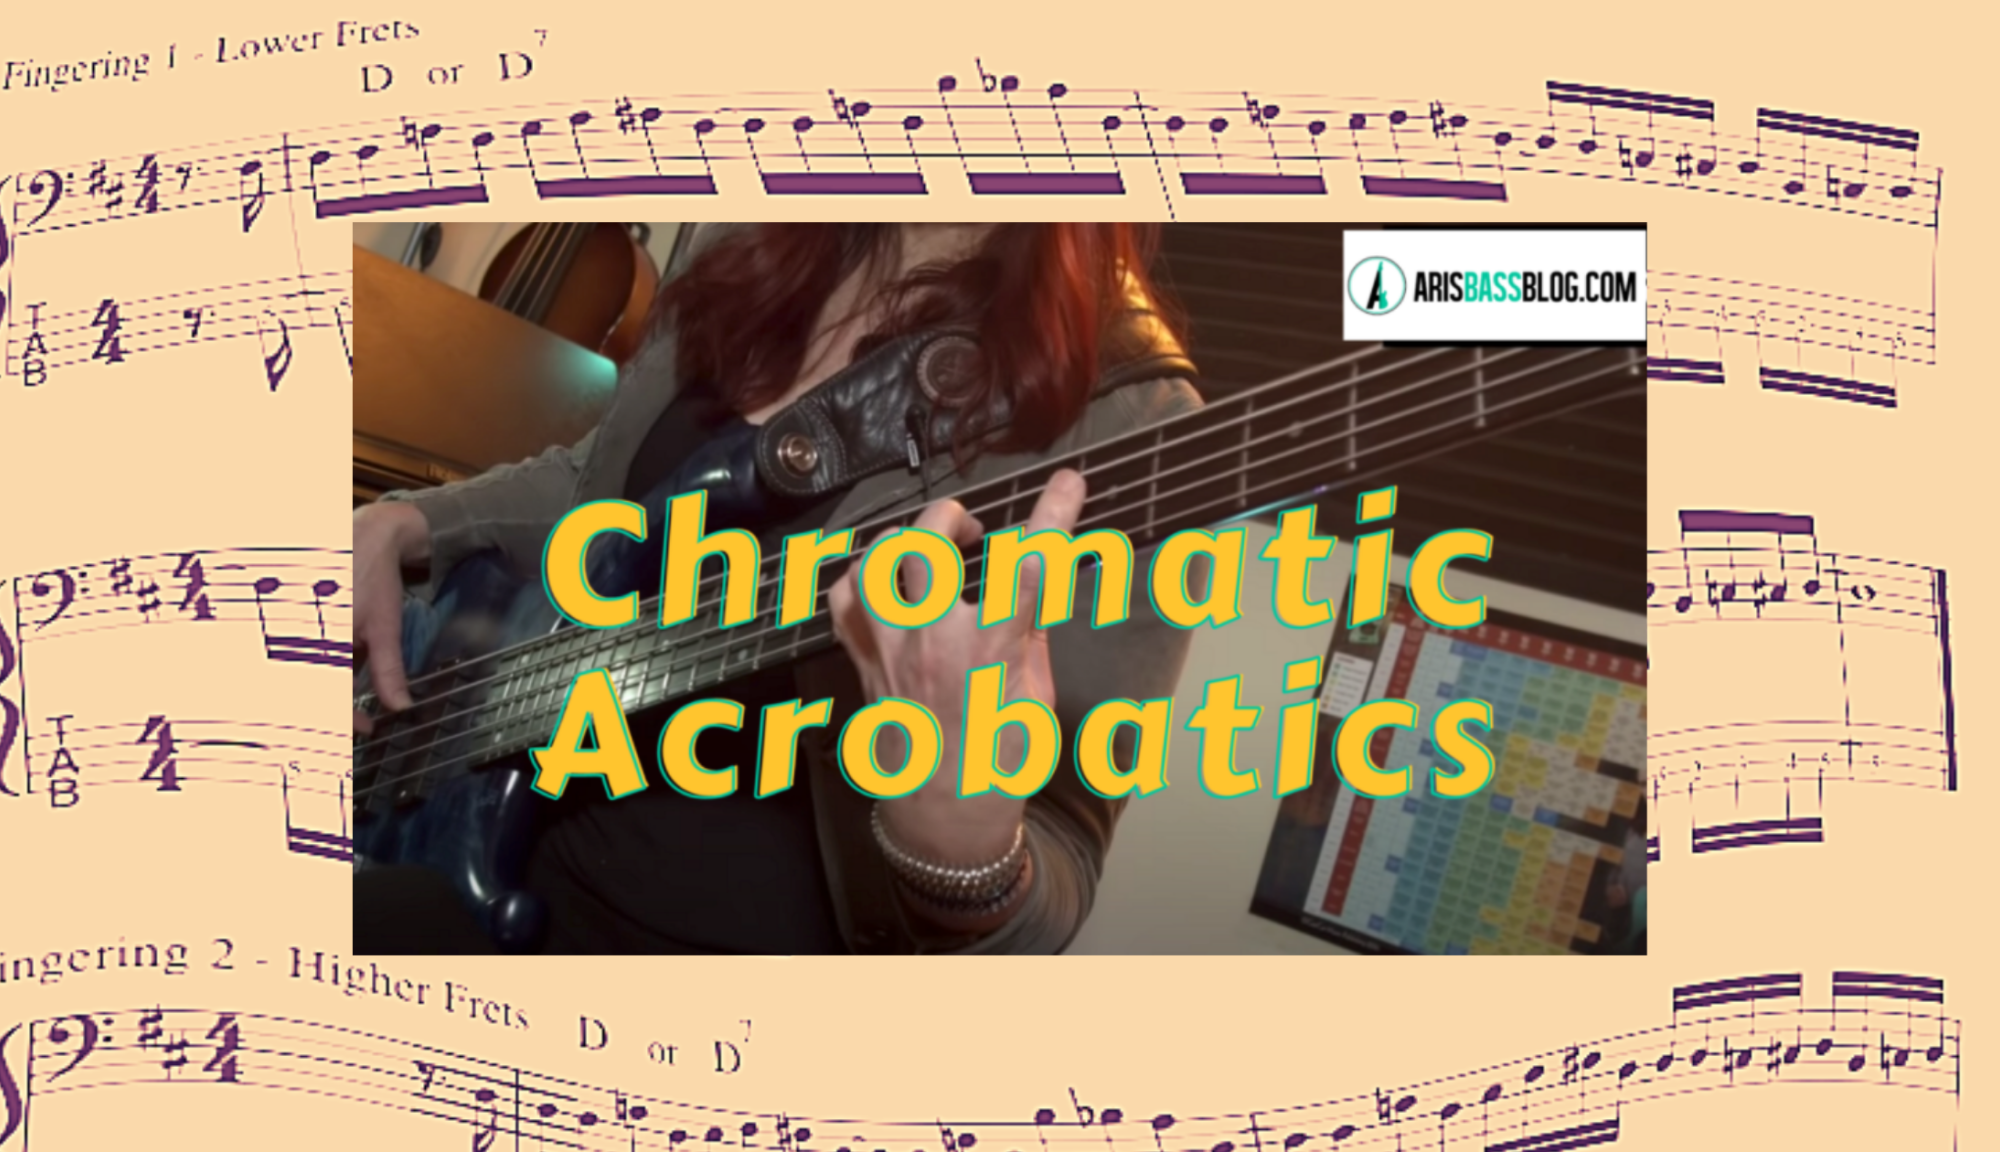 Chromatic acrobatics